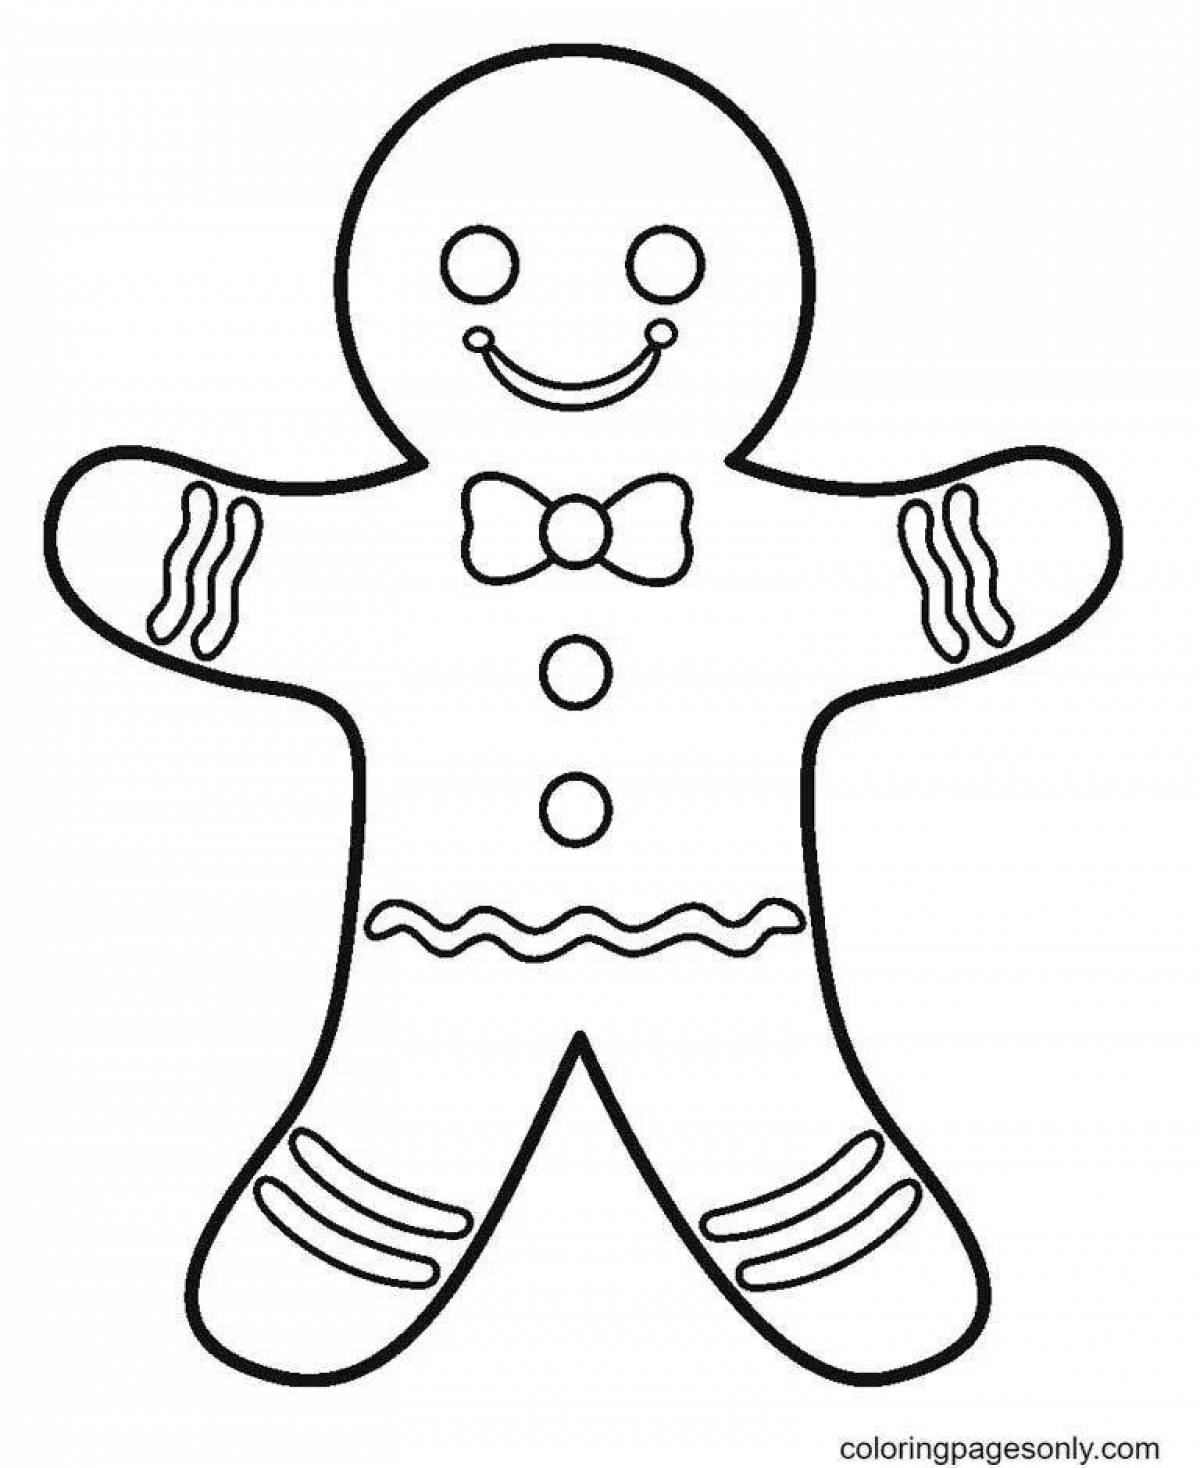 Gingerbread man #1